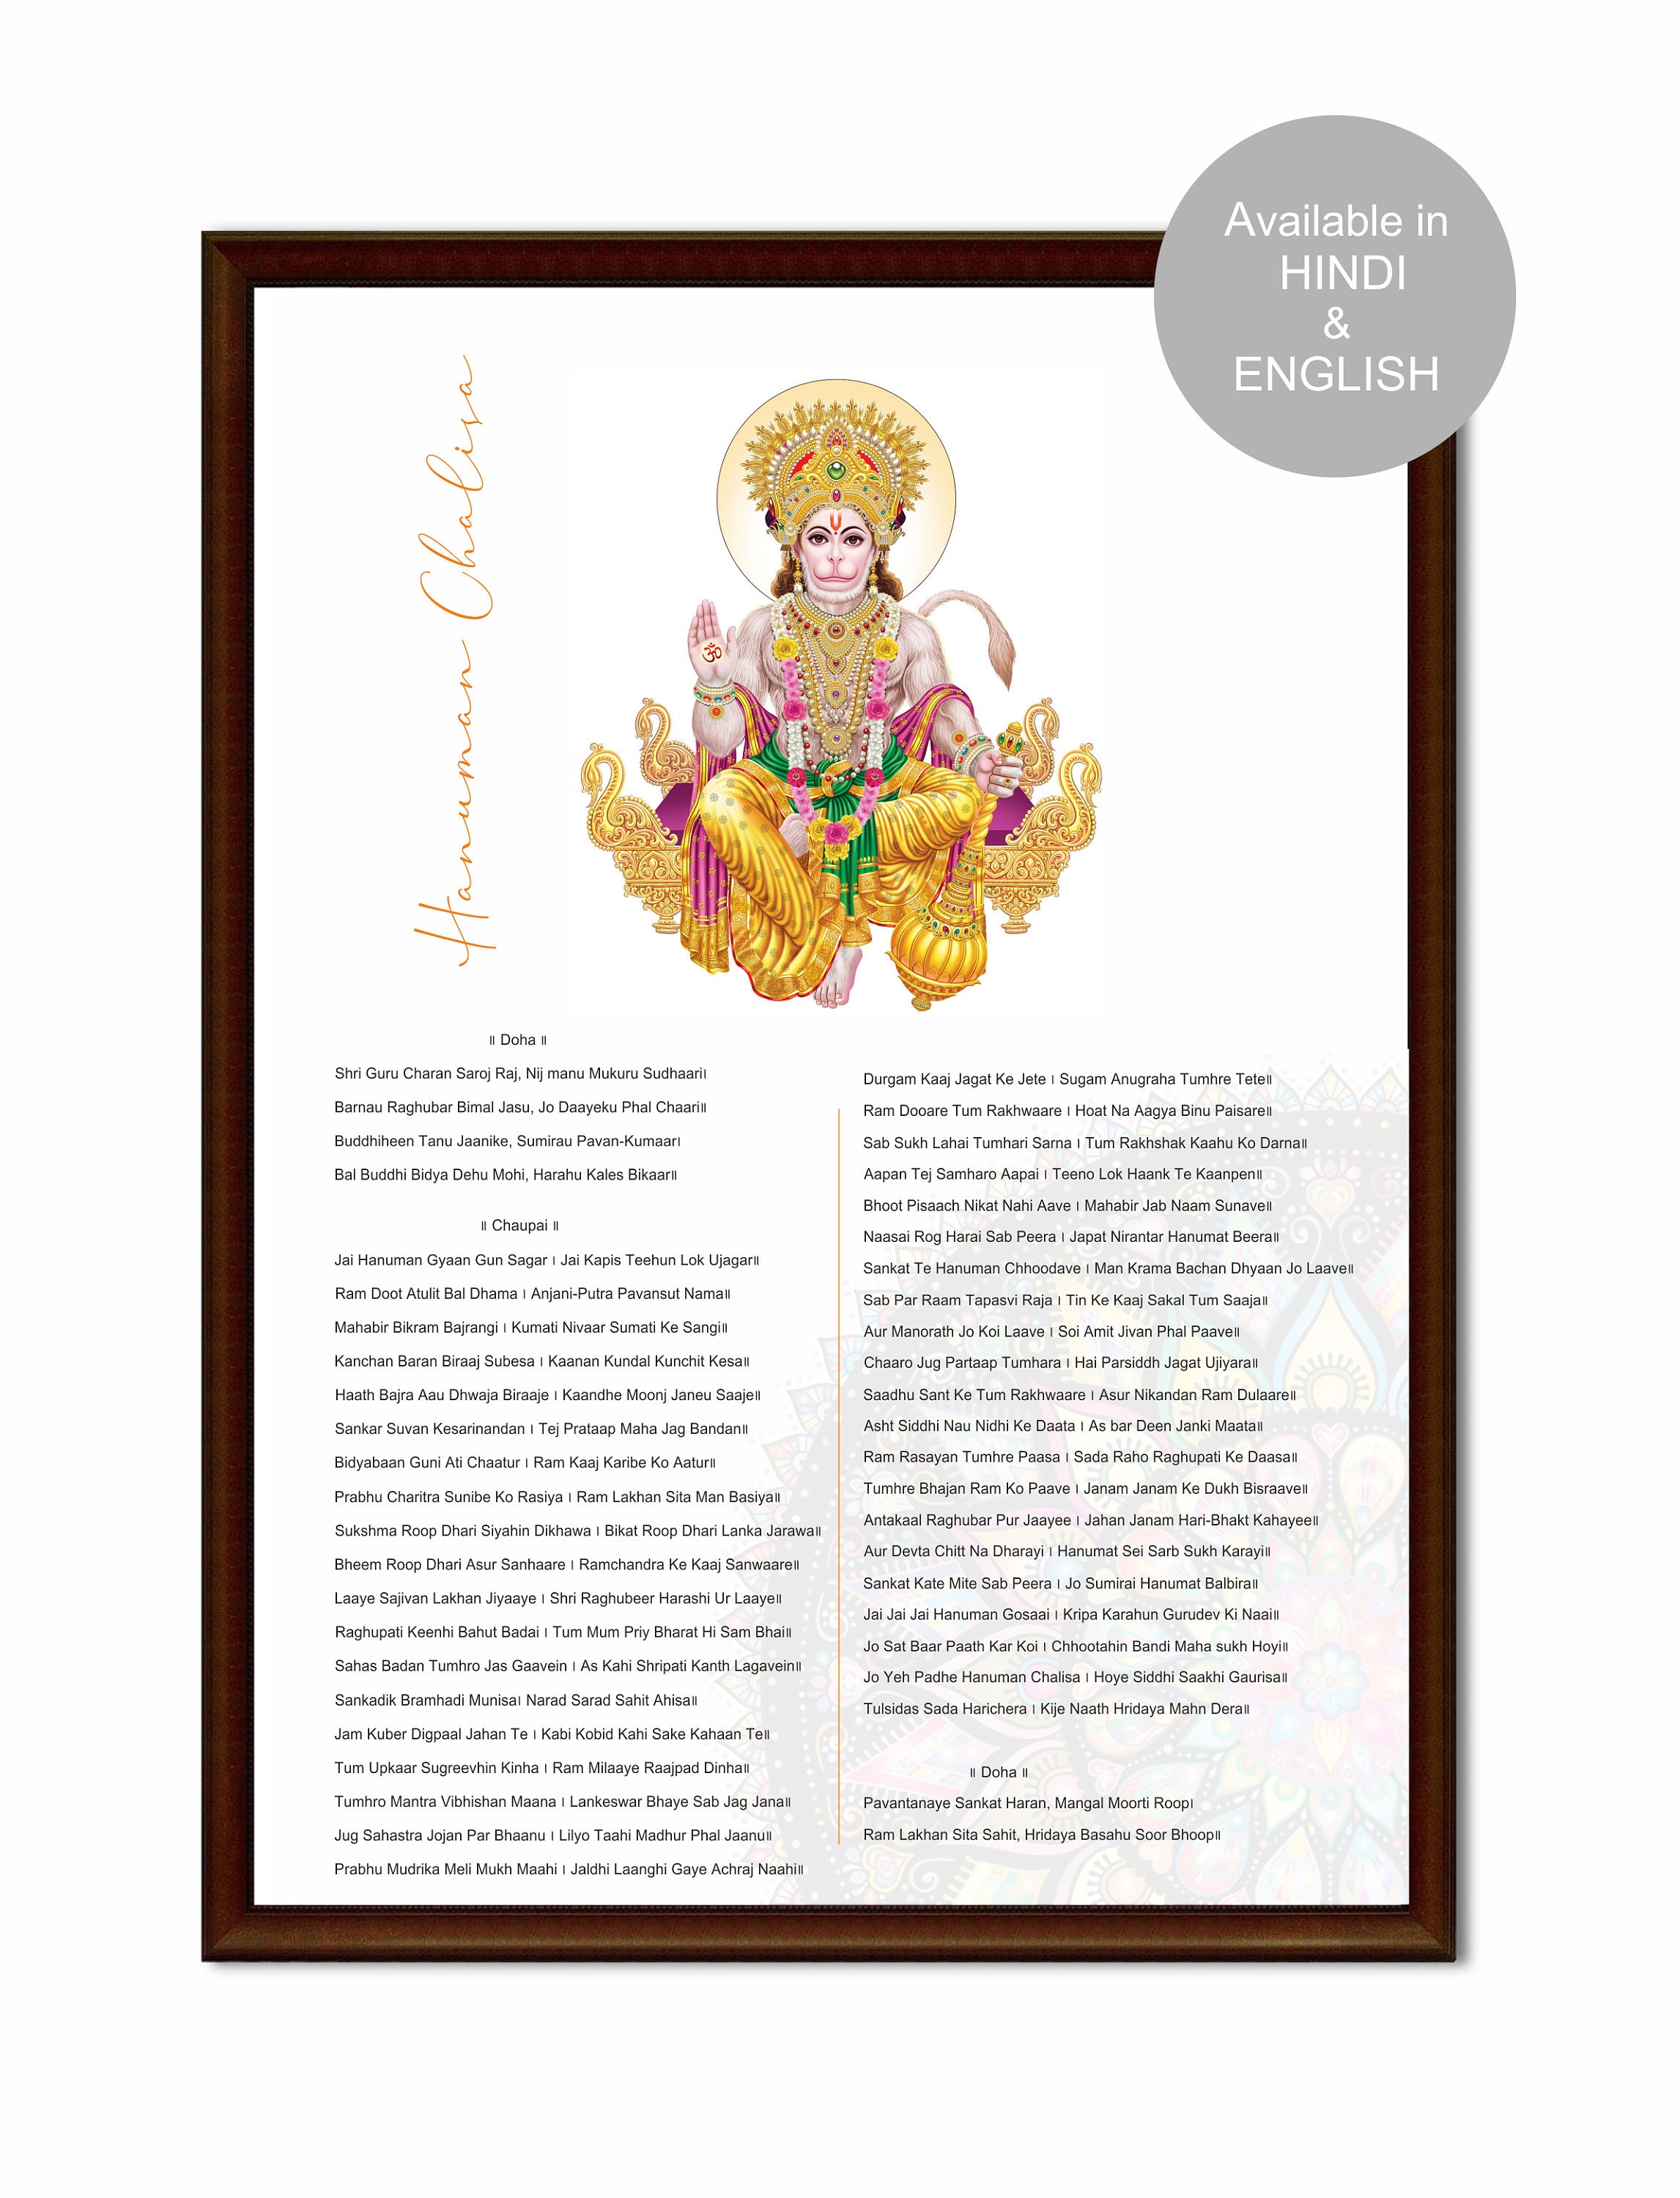 Printable Hanuman Chalisa Hanumanposter Modern Digital Download Printable Wall Art Instant